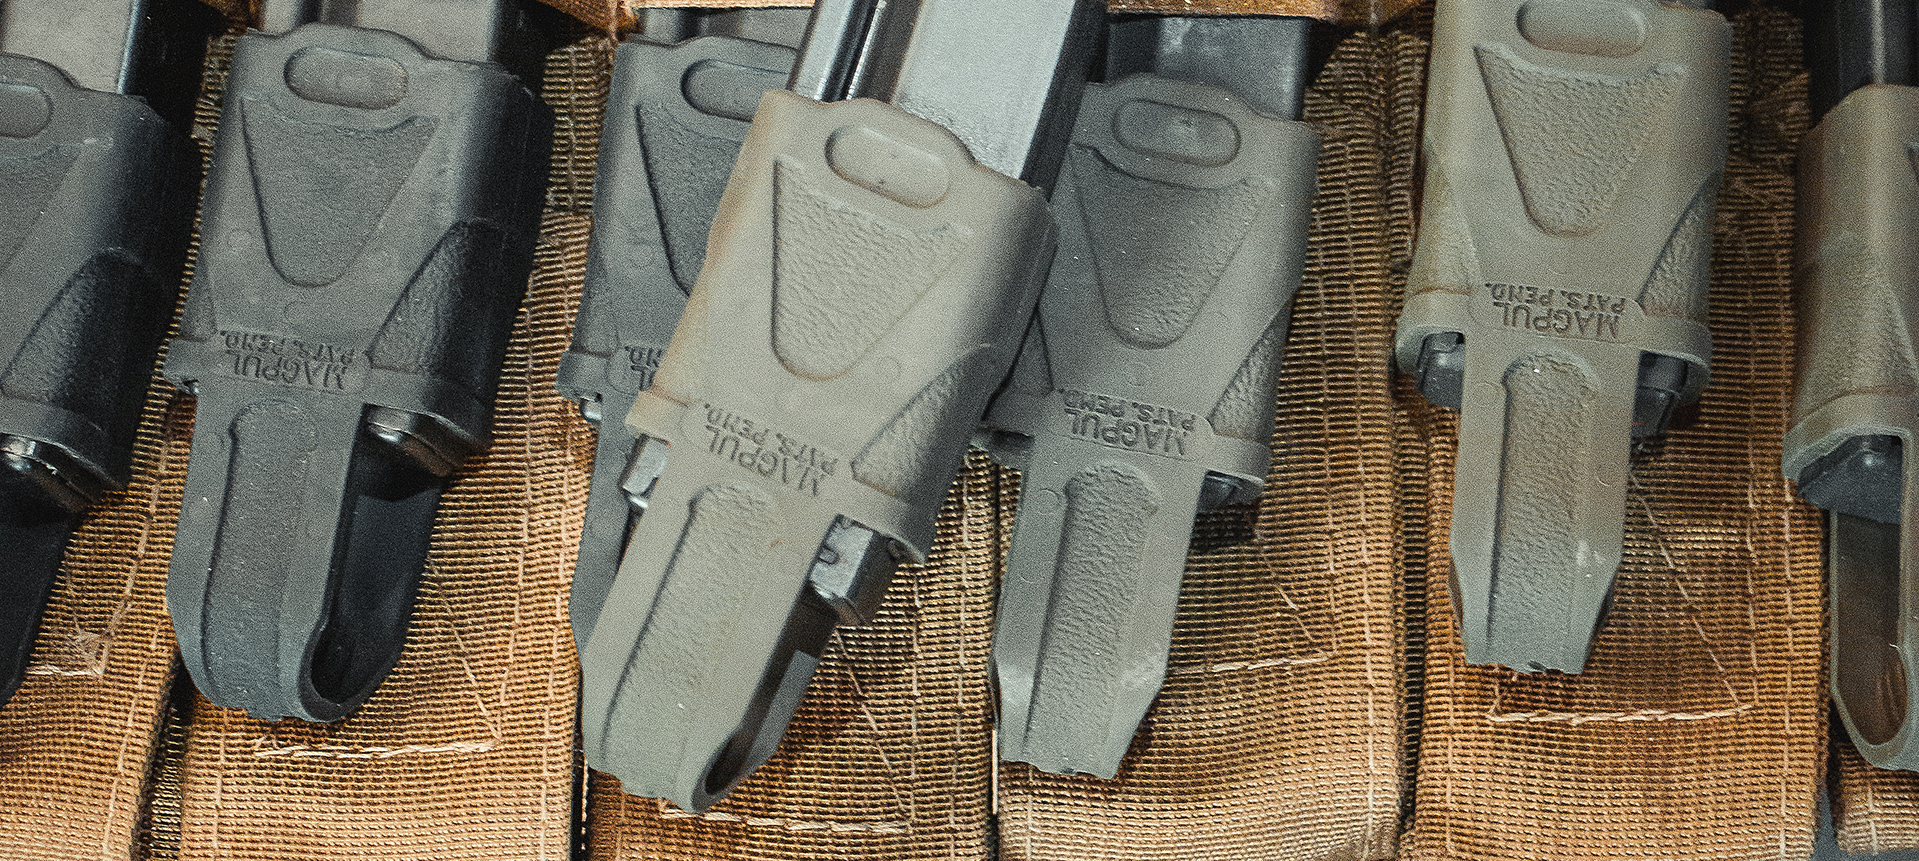 Original Magpul® – 9mm Subgun, 3 Pack